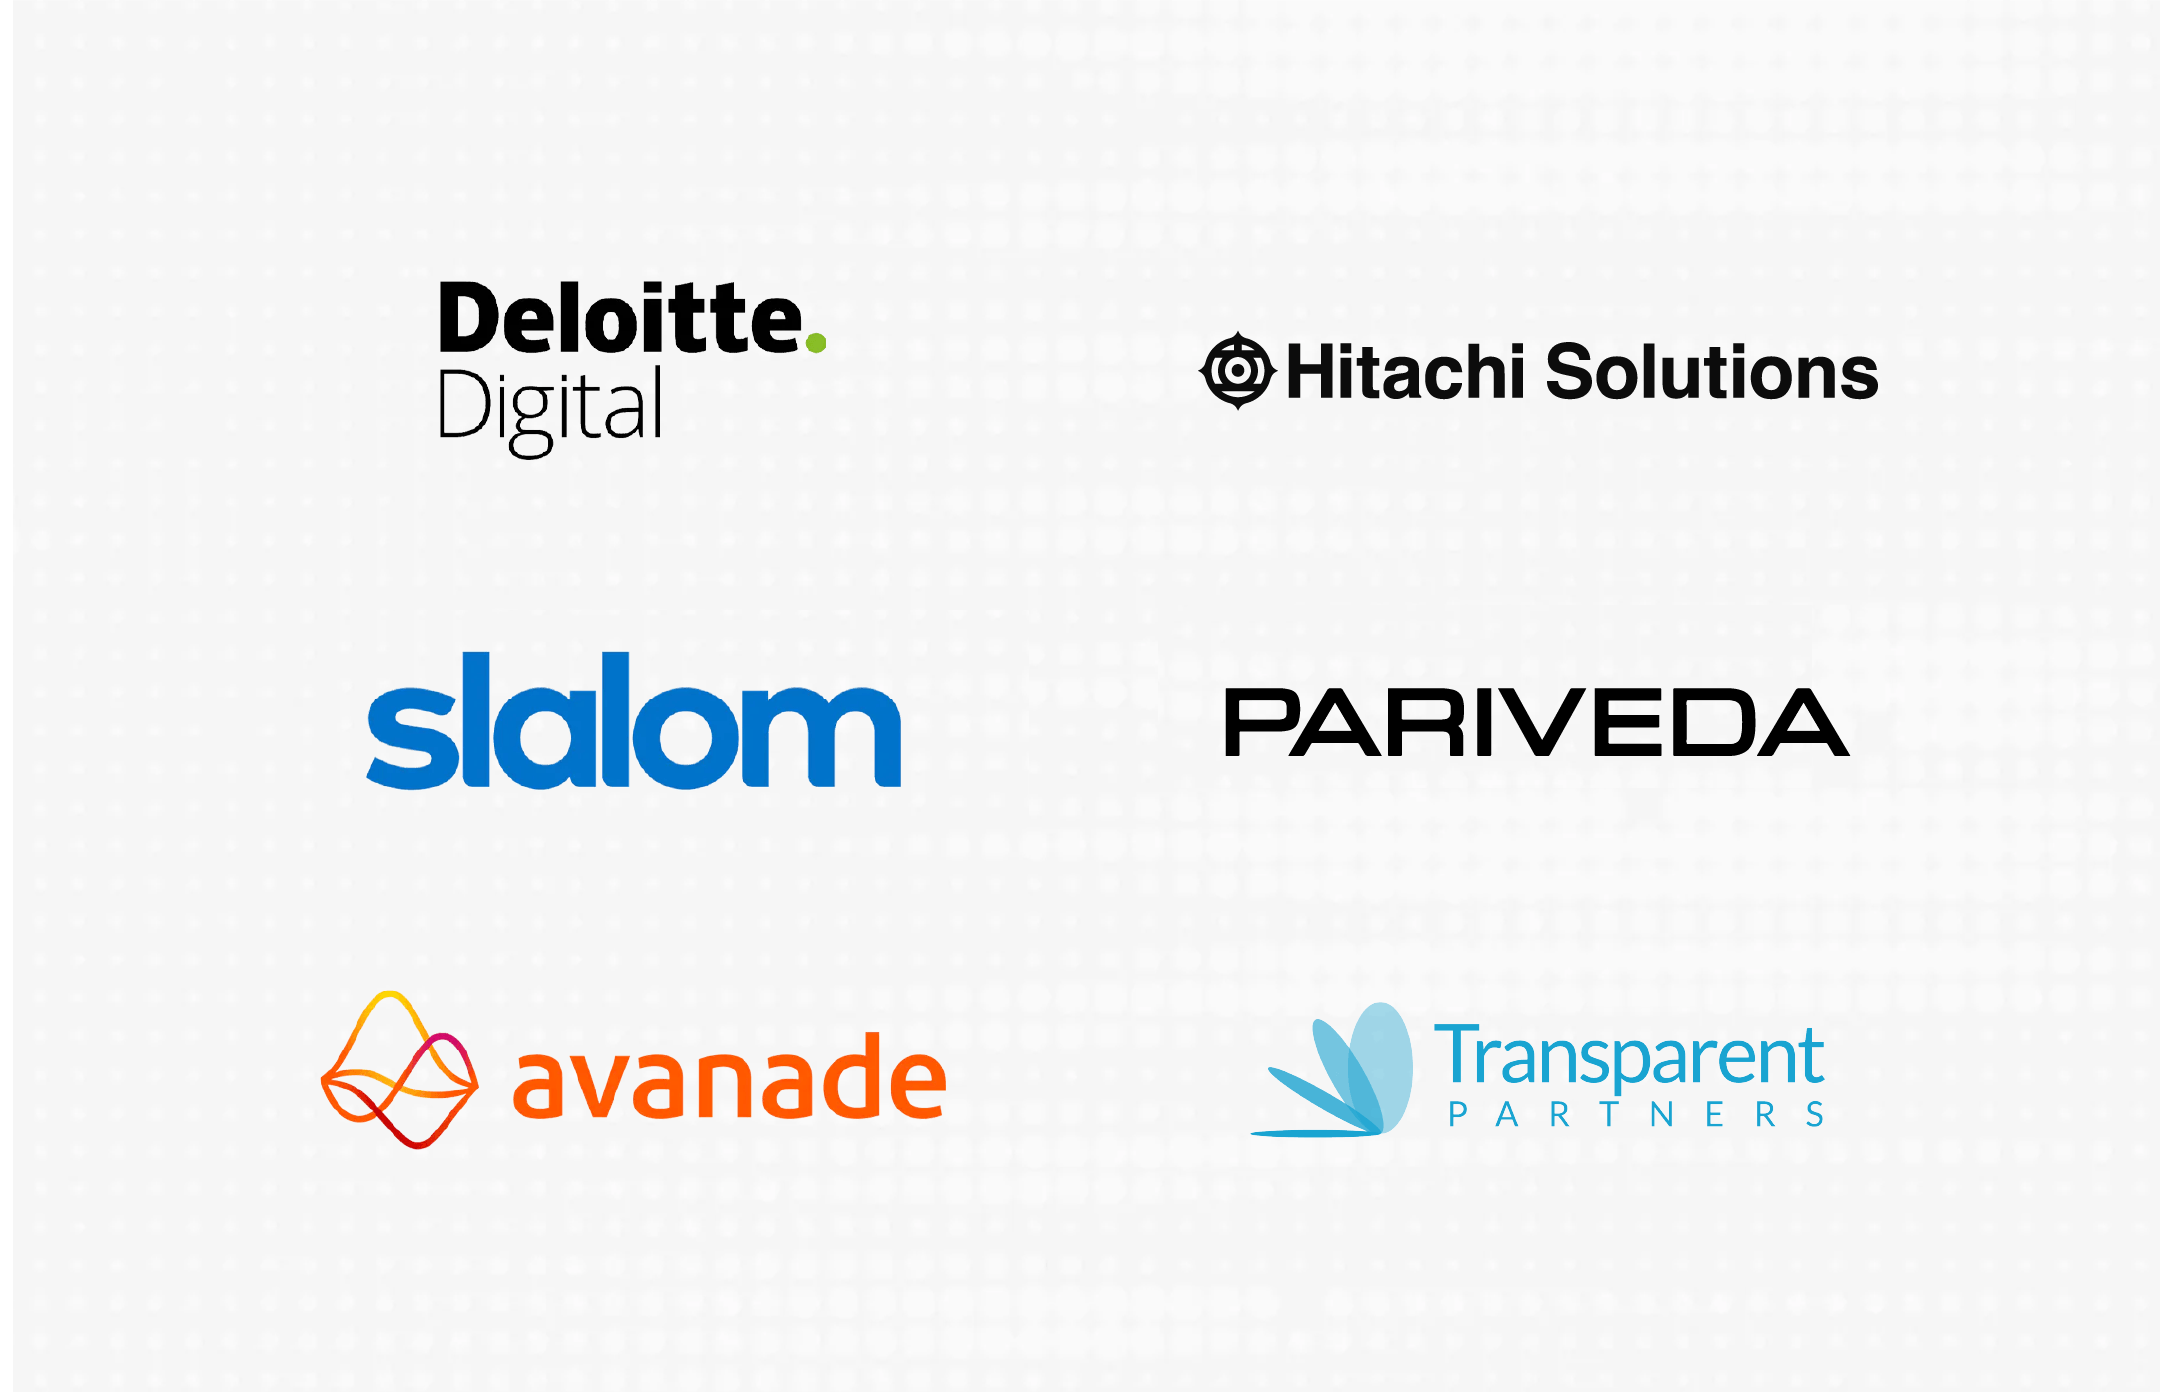 Logo grid featuring logos foravanade, slalom, Hitachi Solutions, Pariveda, Transparent partners, and Deloitte Digital